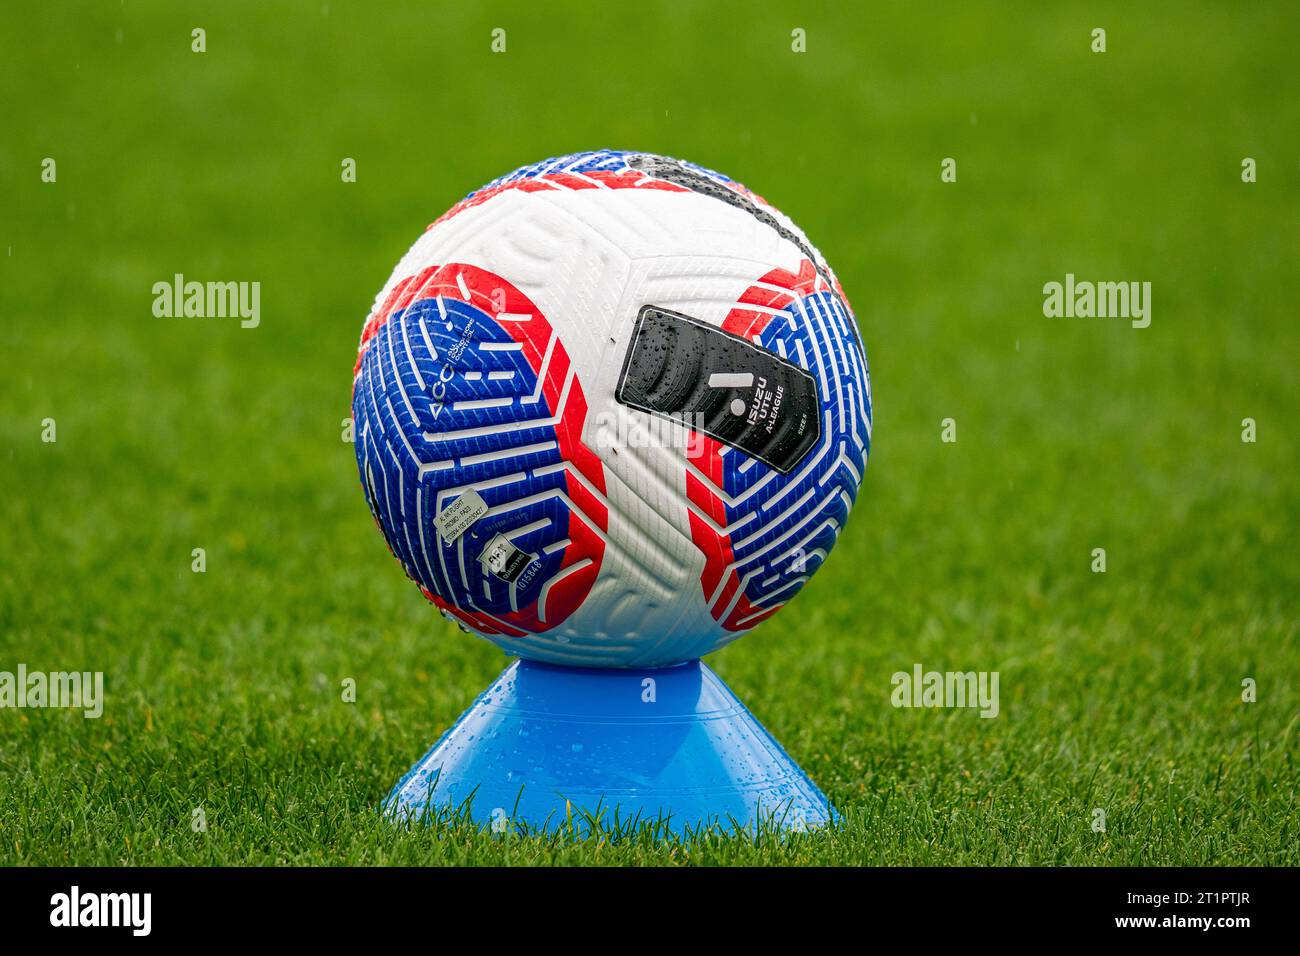 Bundoora, Australien. 15. Oktober 2023. Der offizielle A-League-Ball von Nike. Quelle: James Forrester/Alamy Live News Stockfoto